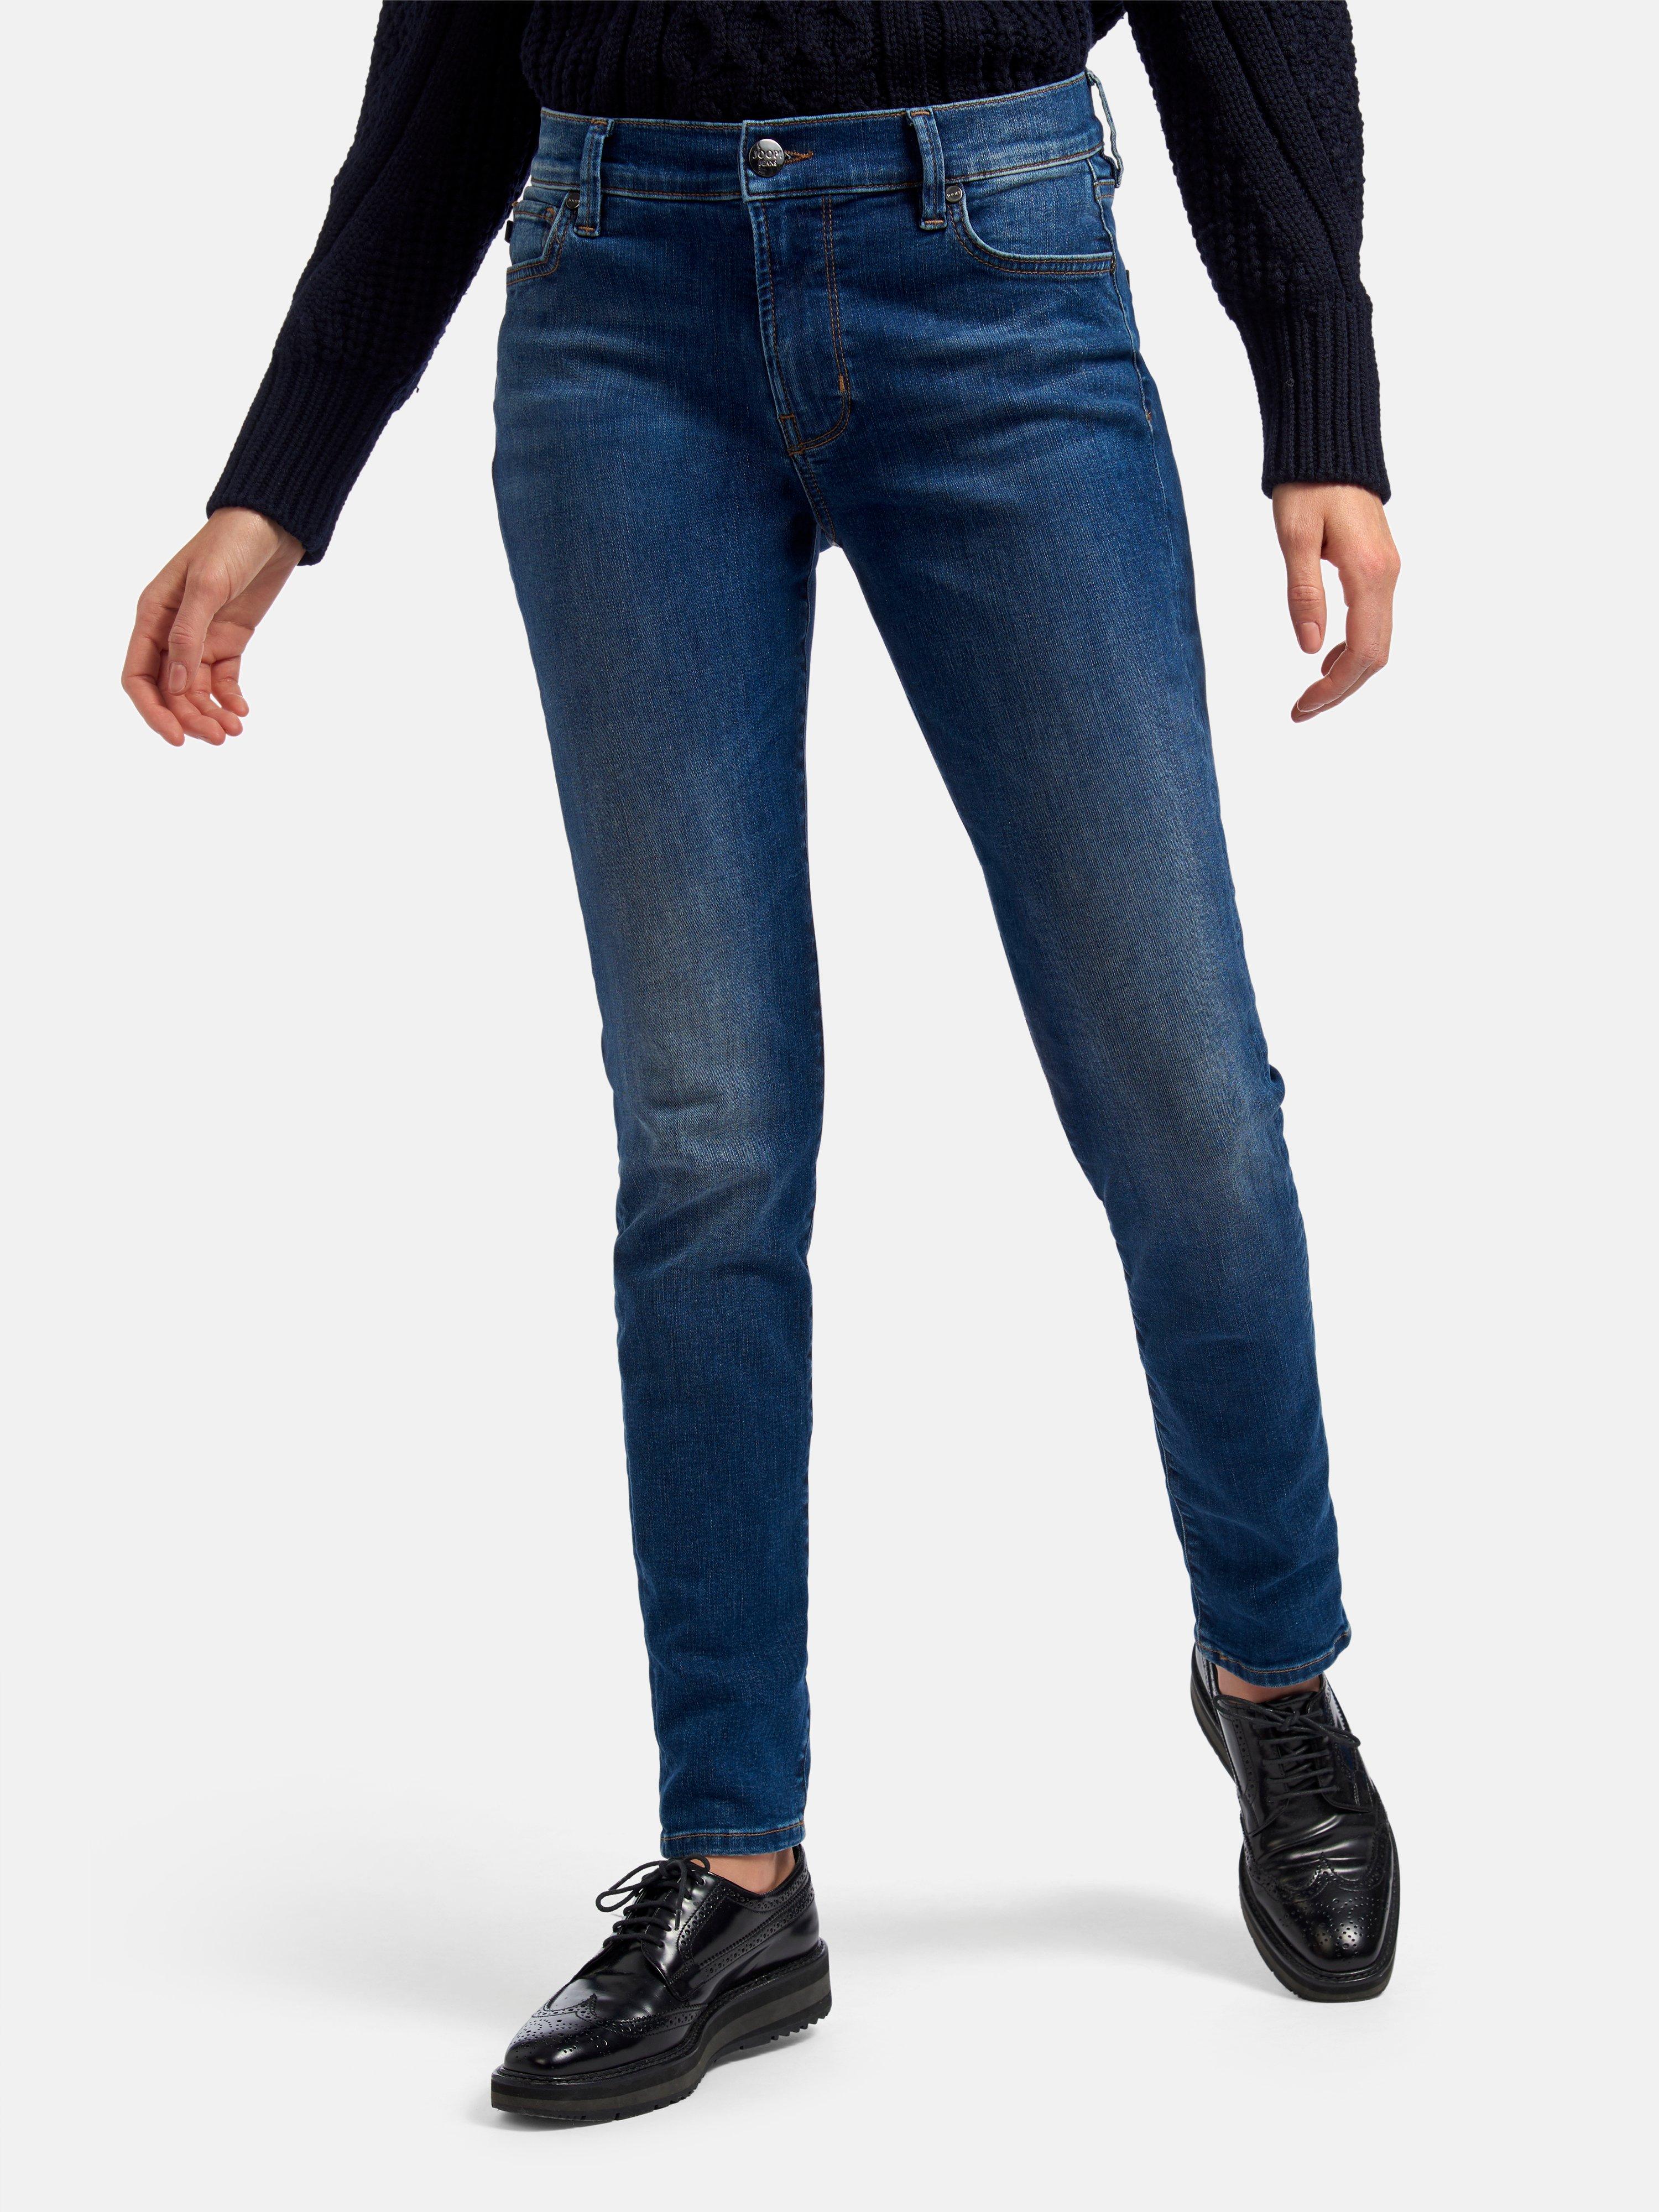 denim Ankle-length blue - Slim - jeans Joop! Fit